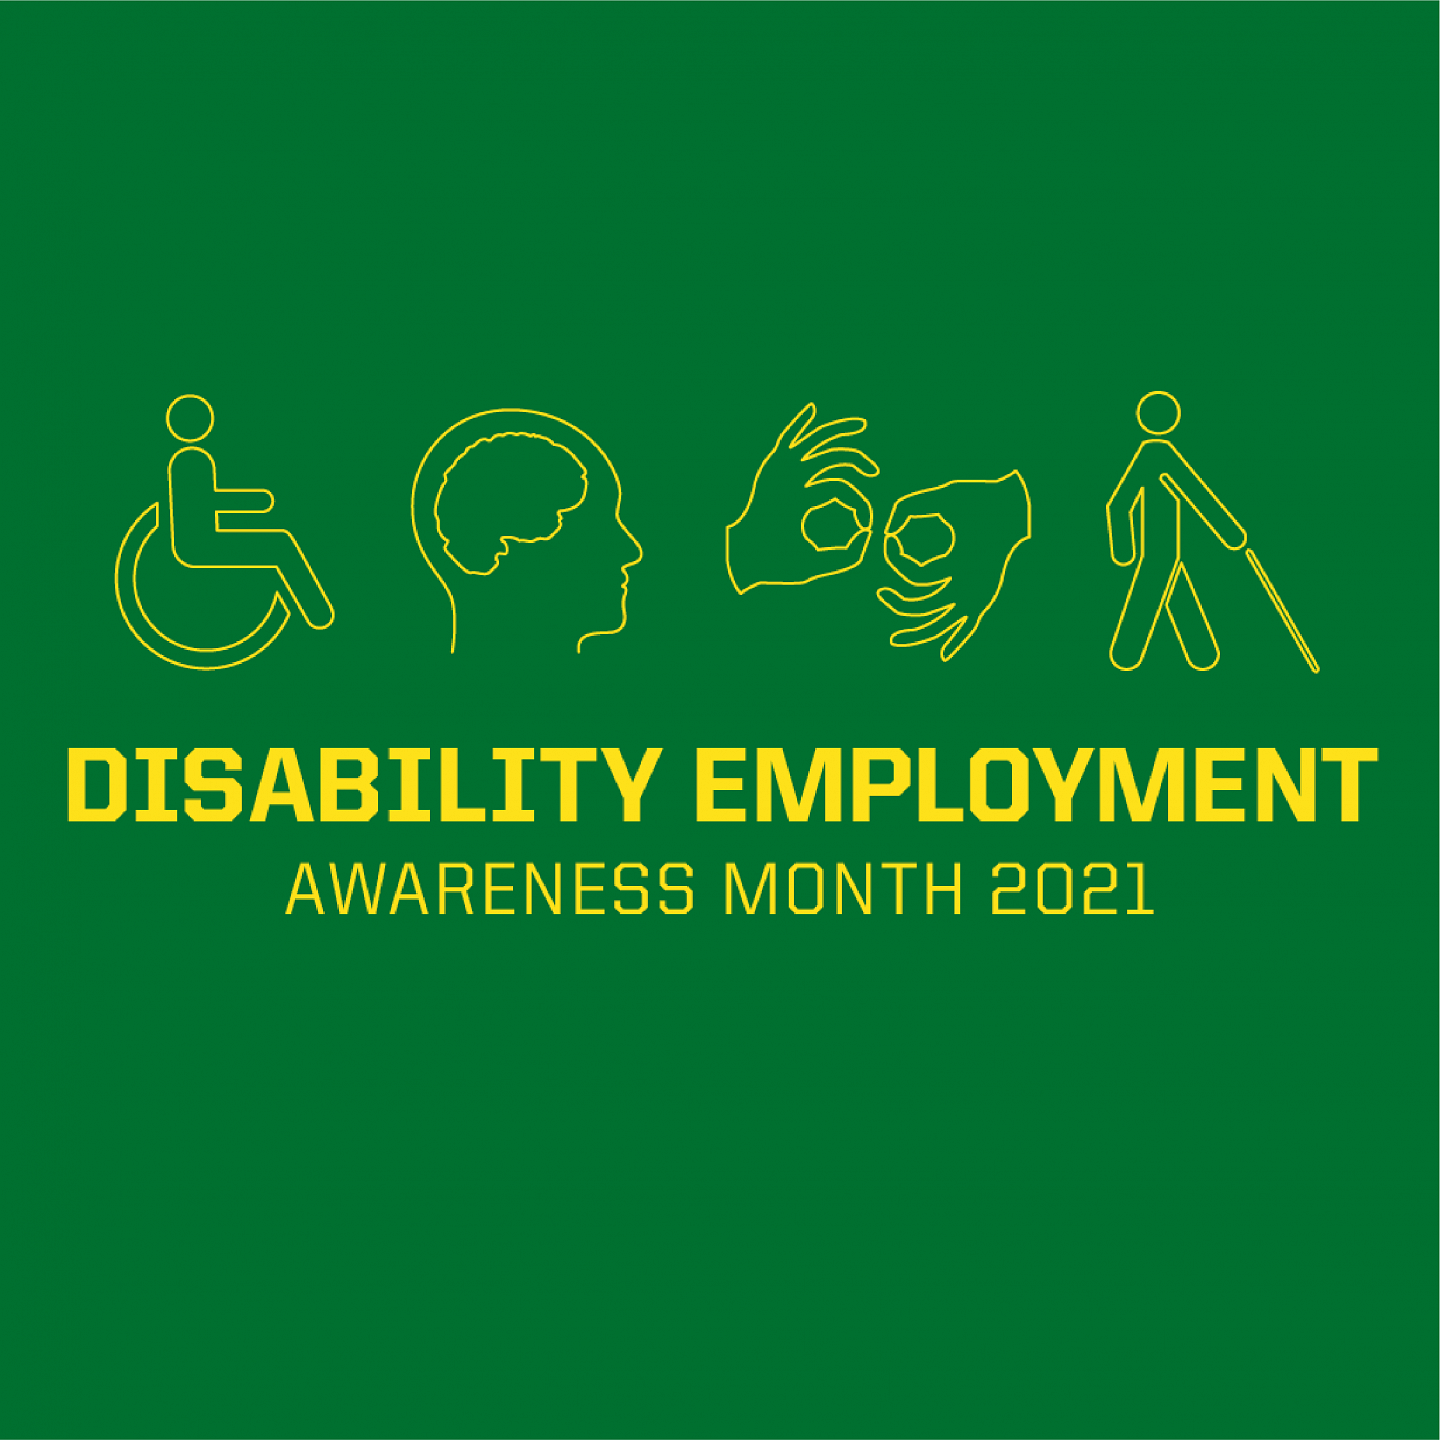 National disability employment awareness month